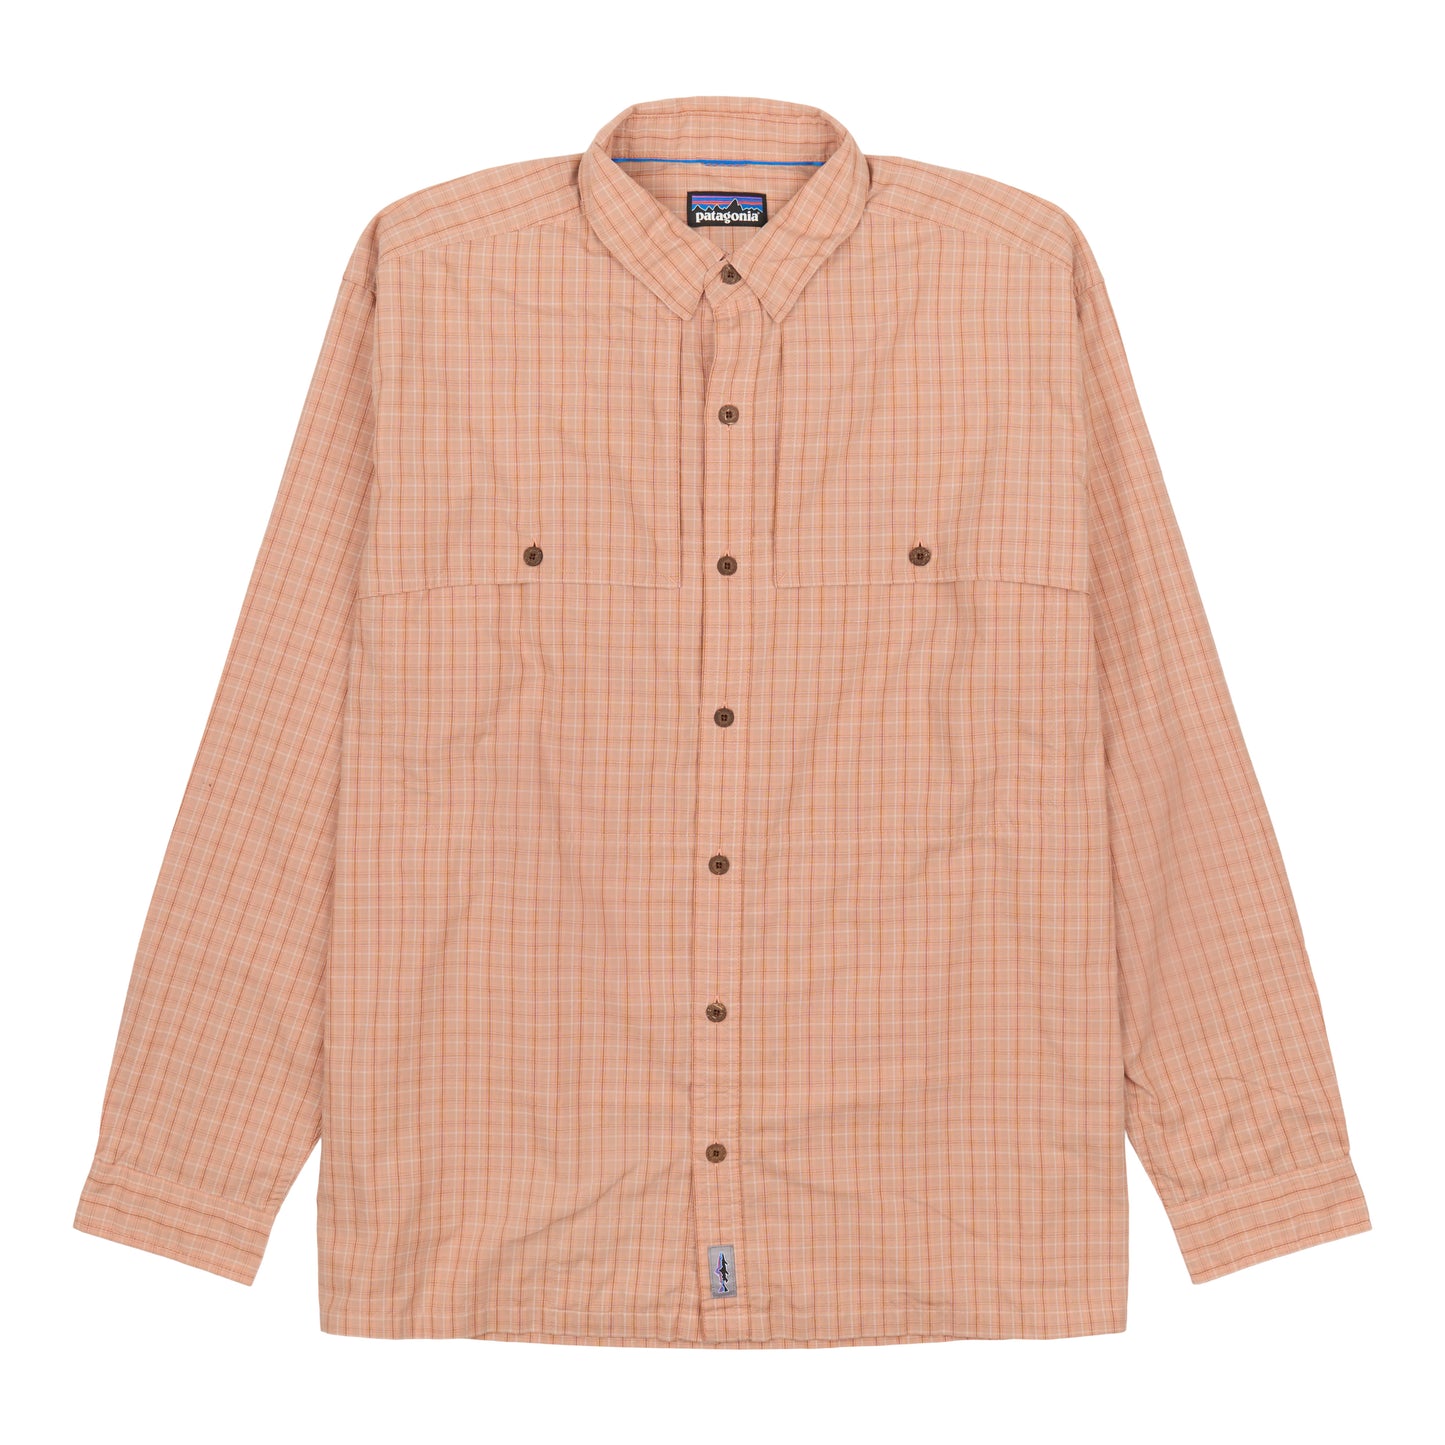 Men's Long-Sleeved Island Hopper Shirt